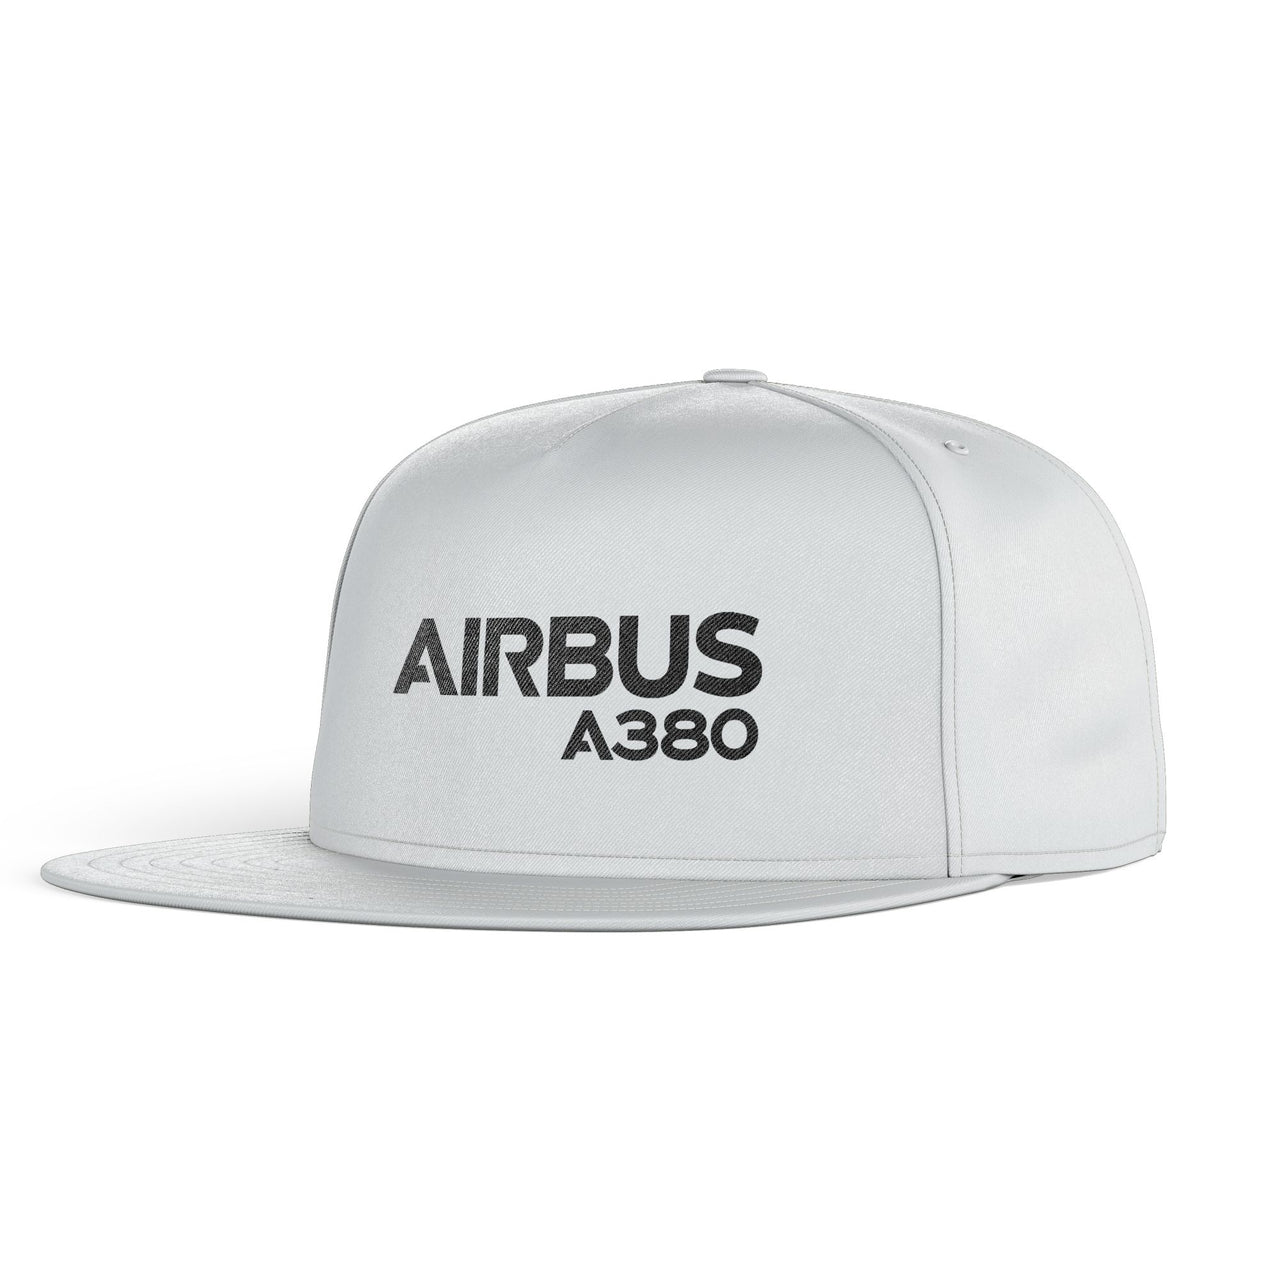 Airbus A380 & Text Designed Snapback Caps & Hats